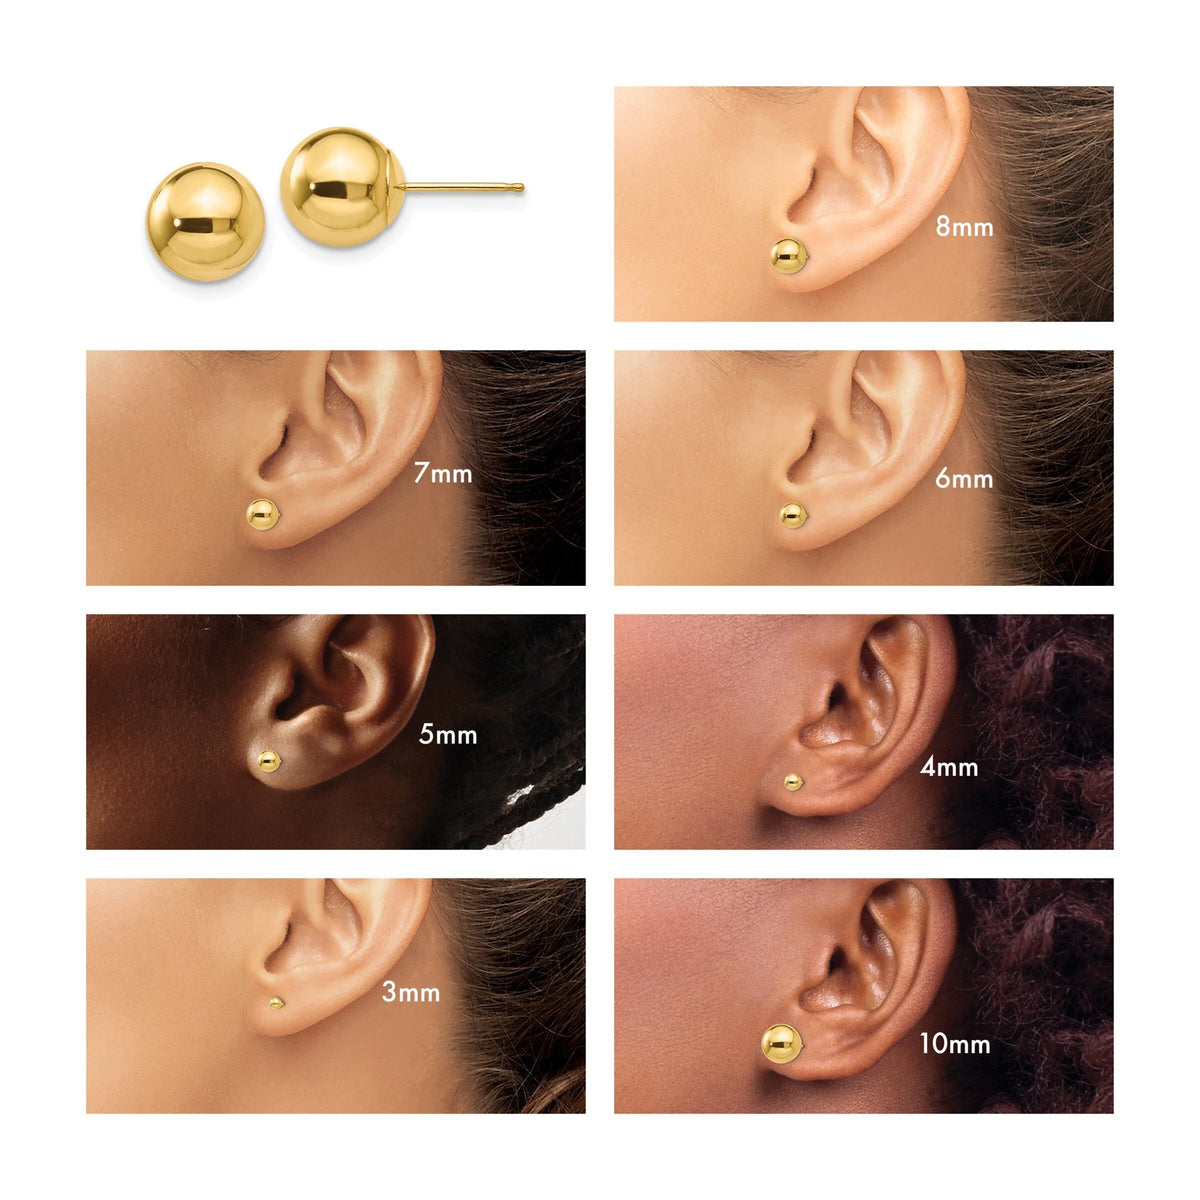 Ball Stud Earrings 4mm 14K Yellow Gold